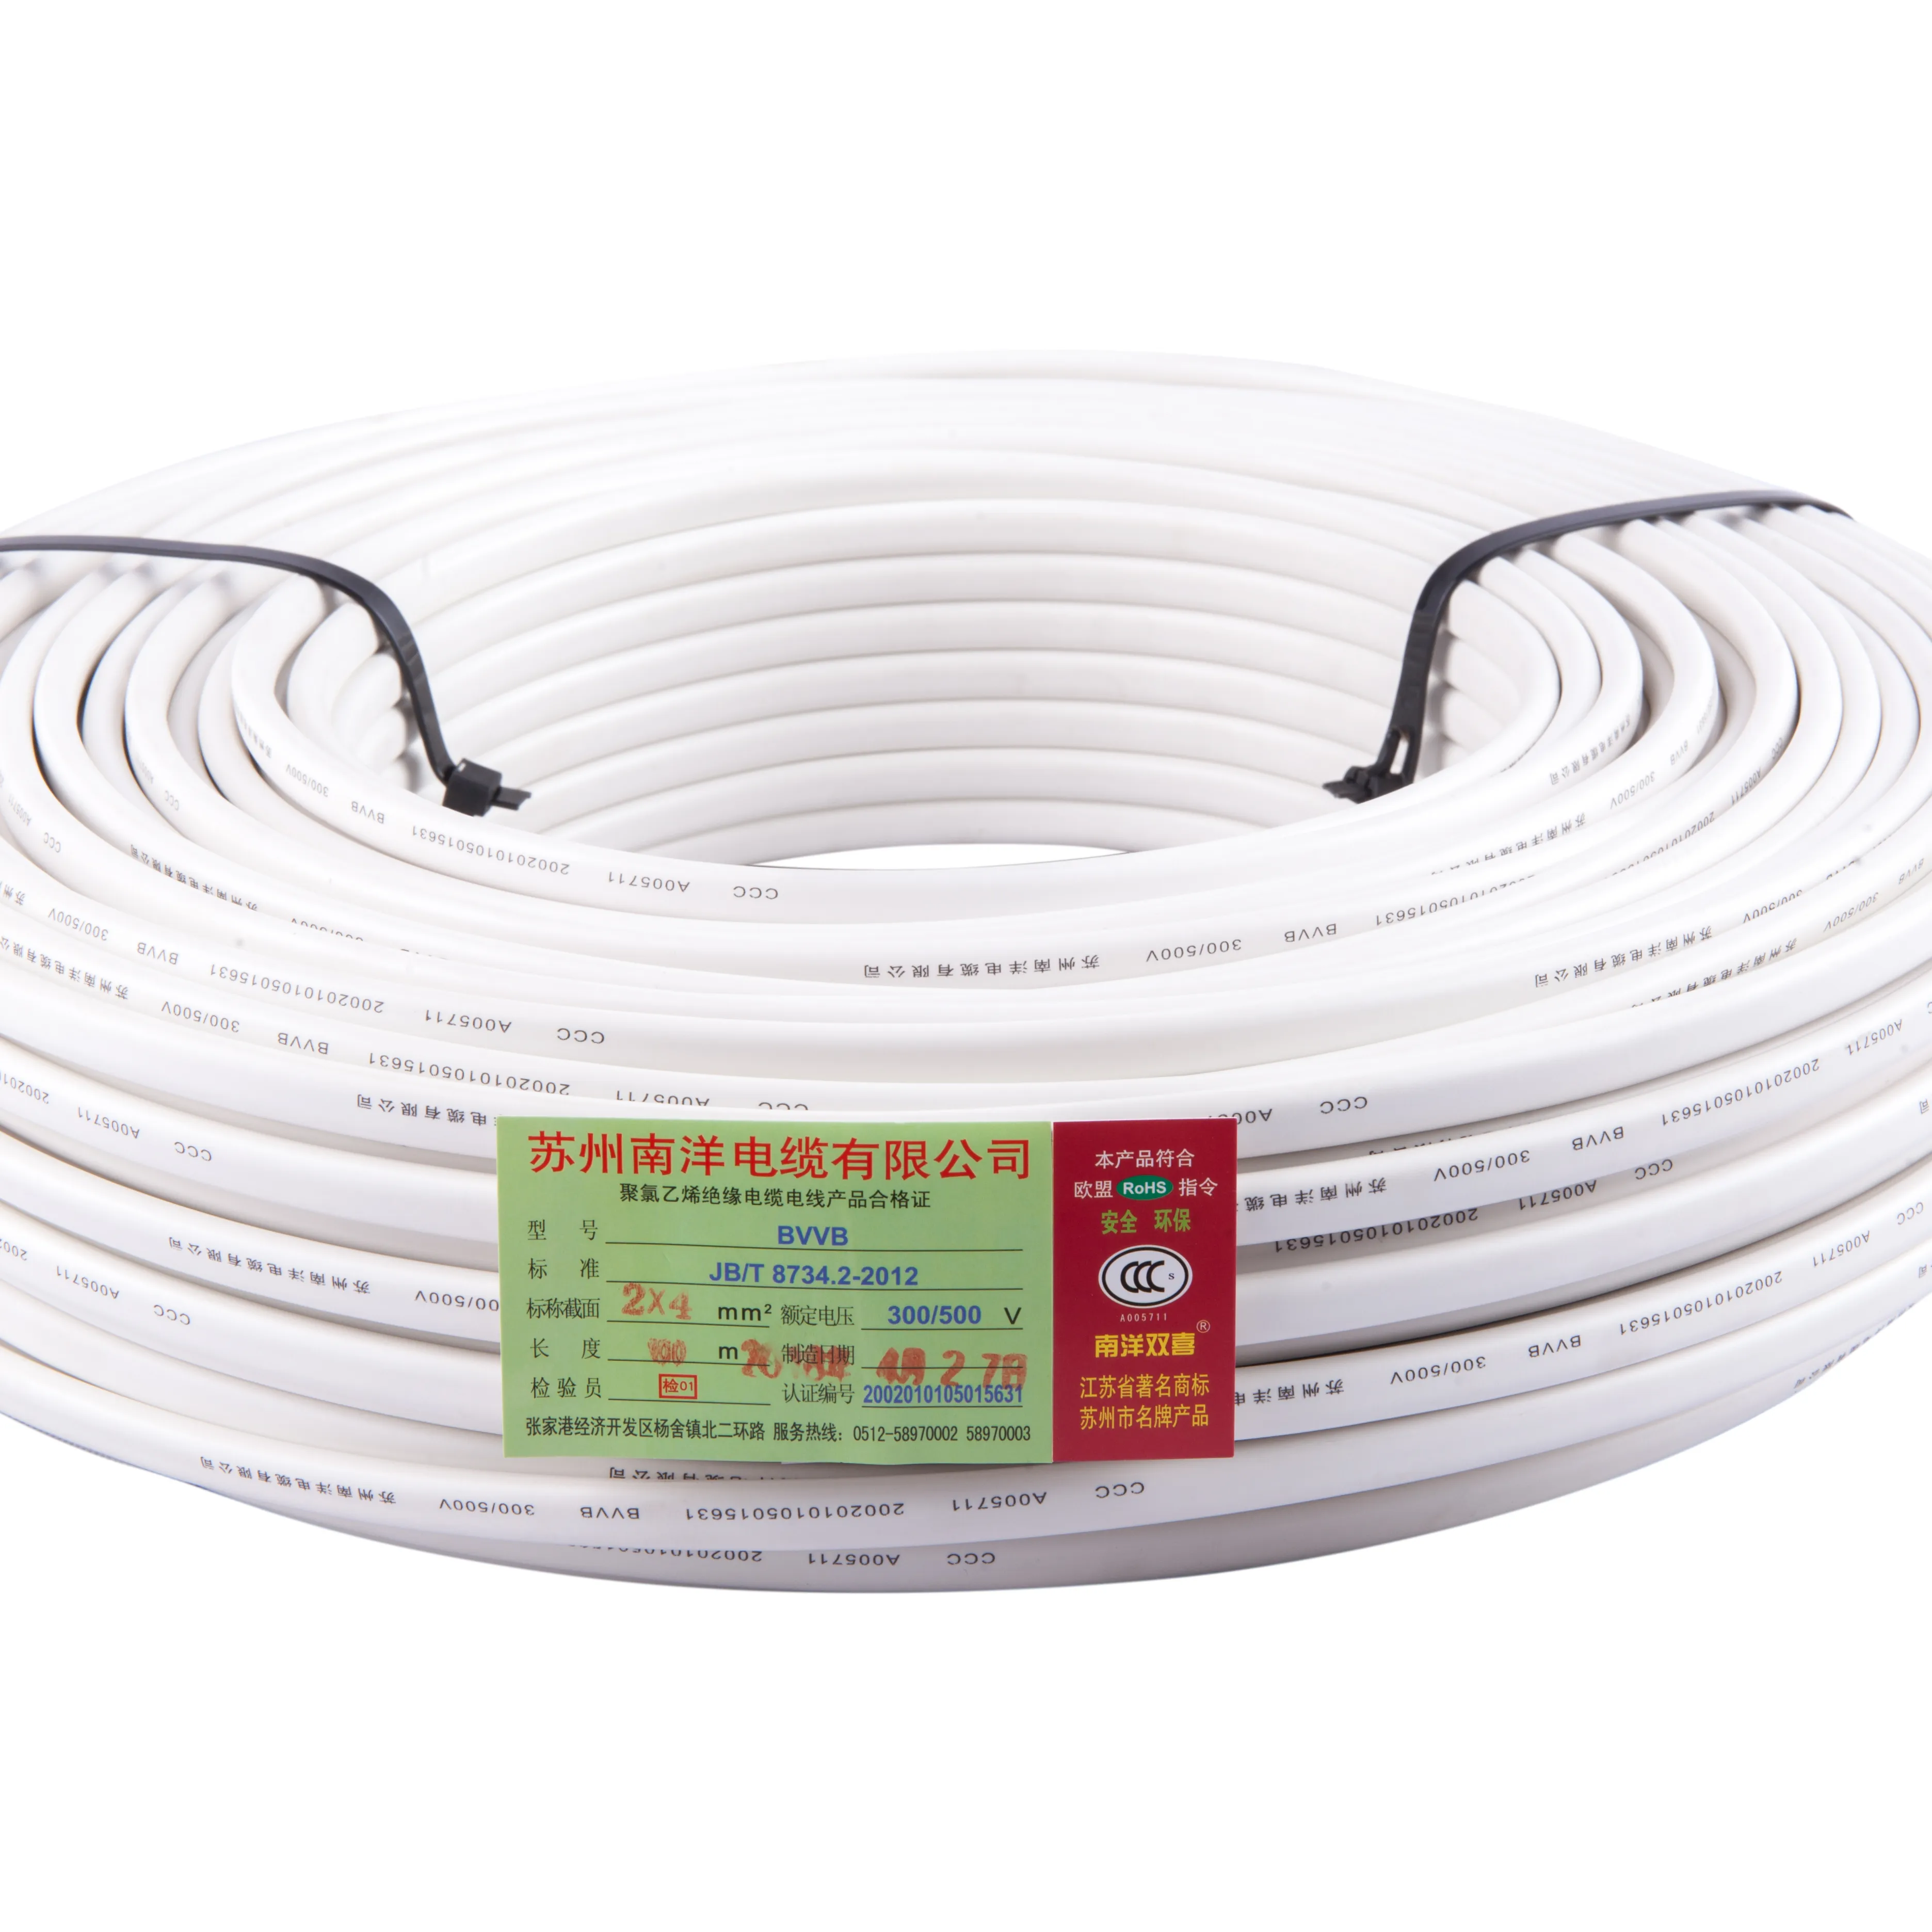 Bvvb Bvvb kabel datar berselubung PVC kualitas tinggi untuk Transfer daya di bawah tegangan rendah dengan "standar"